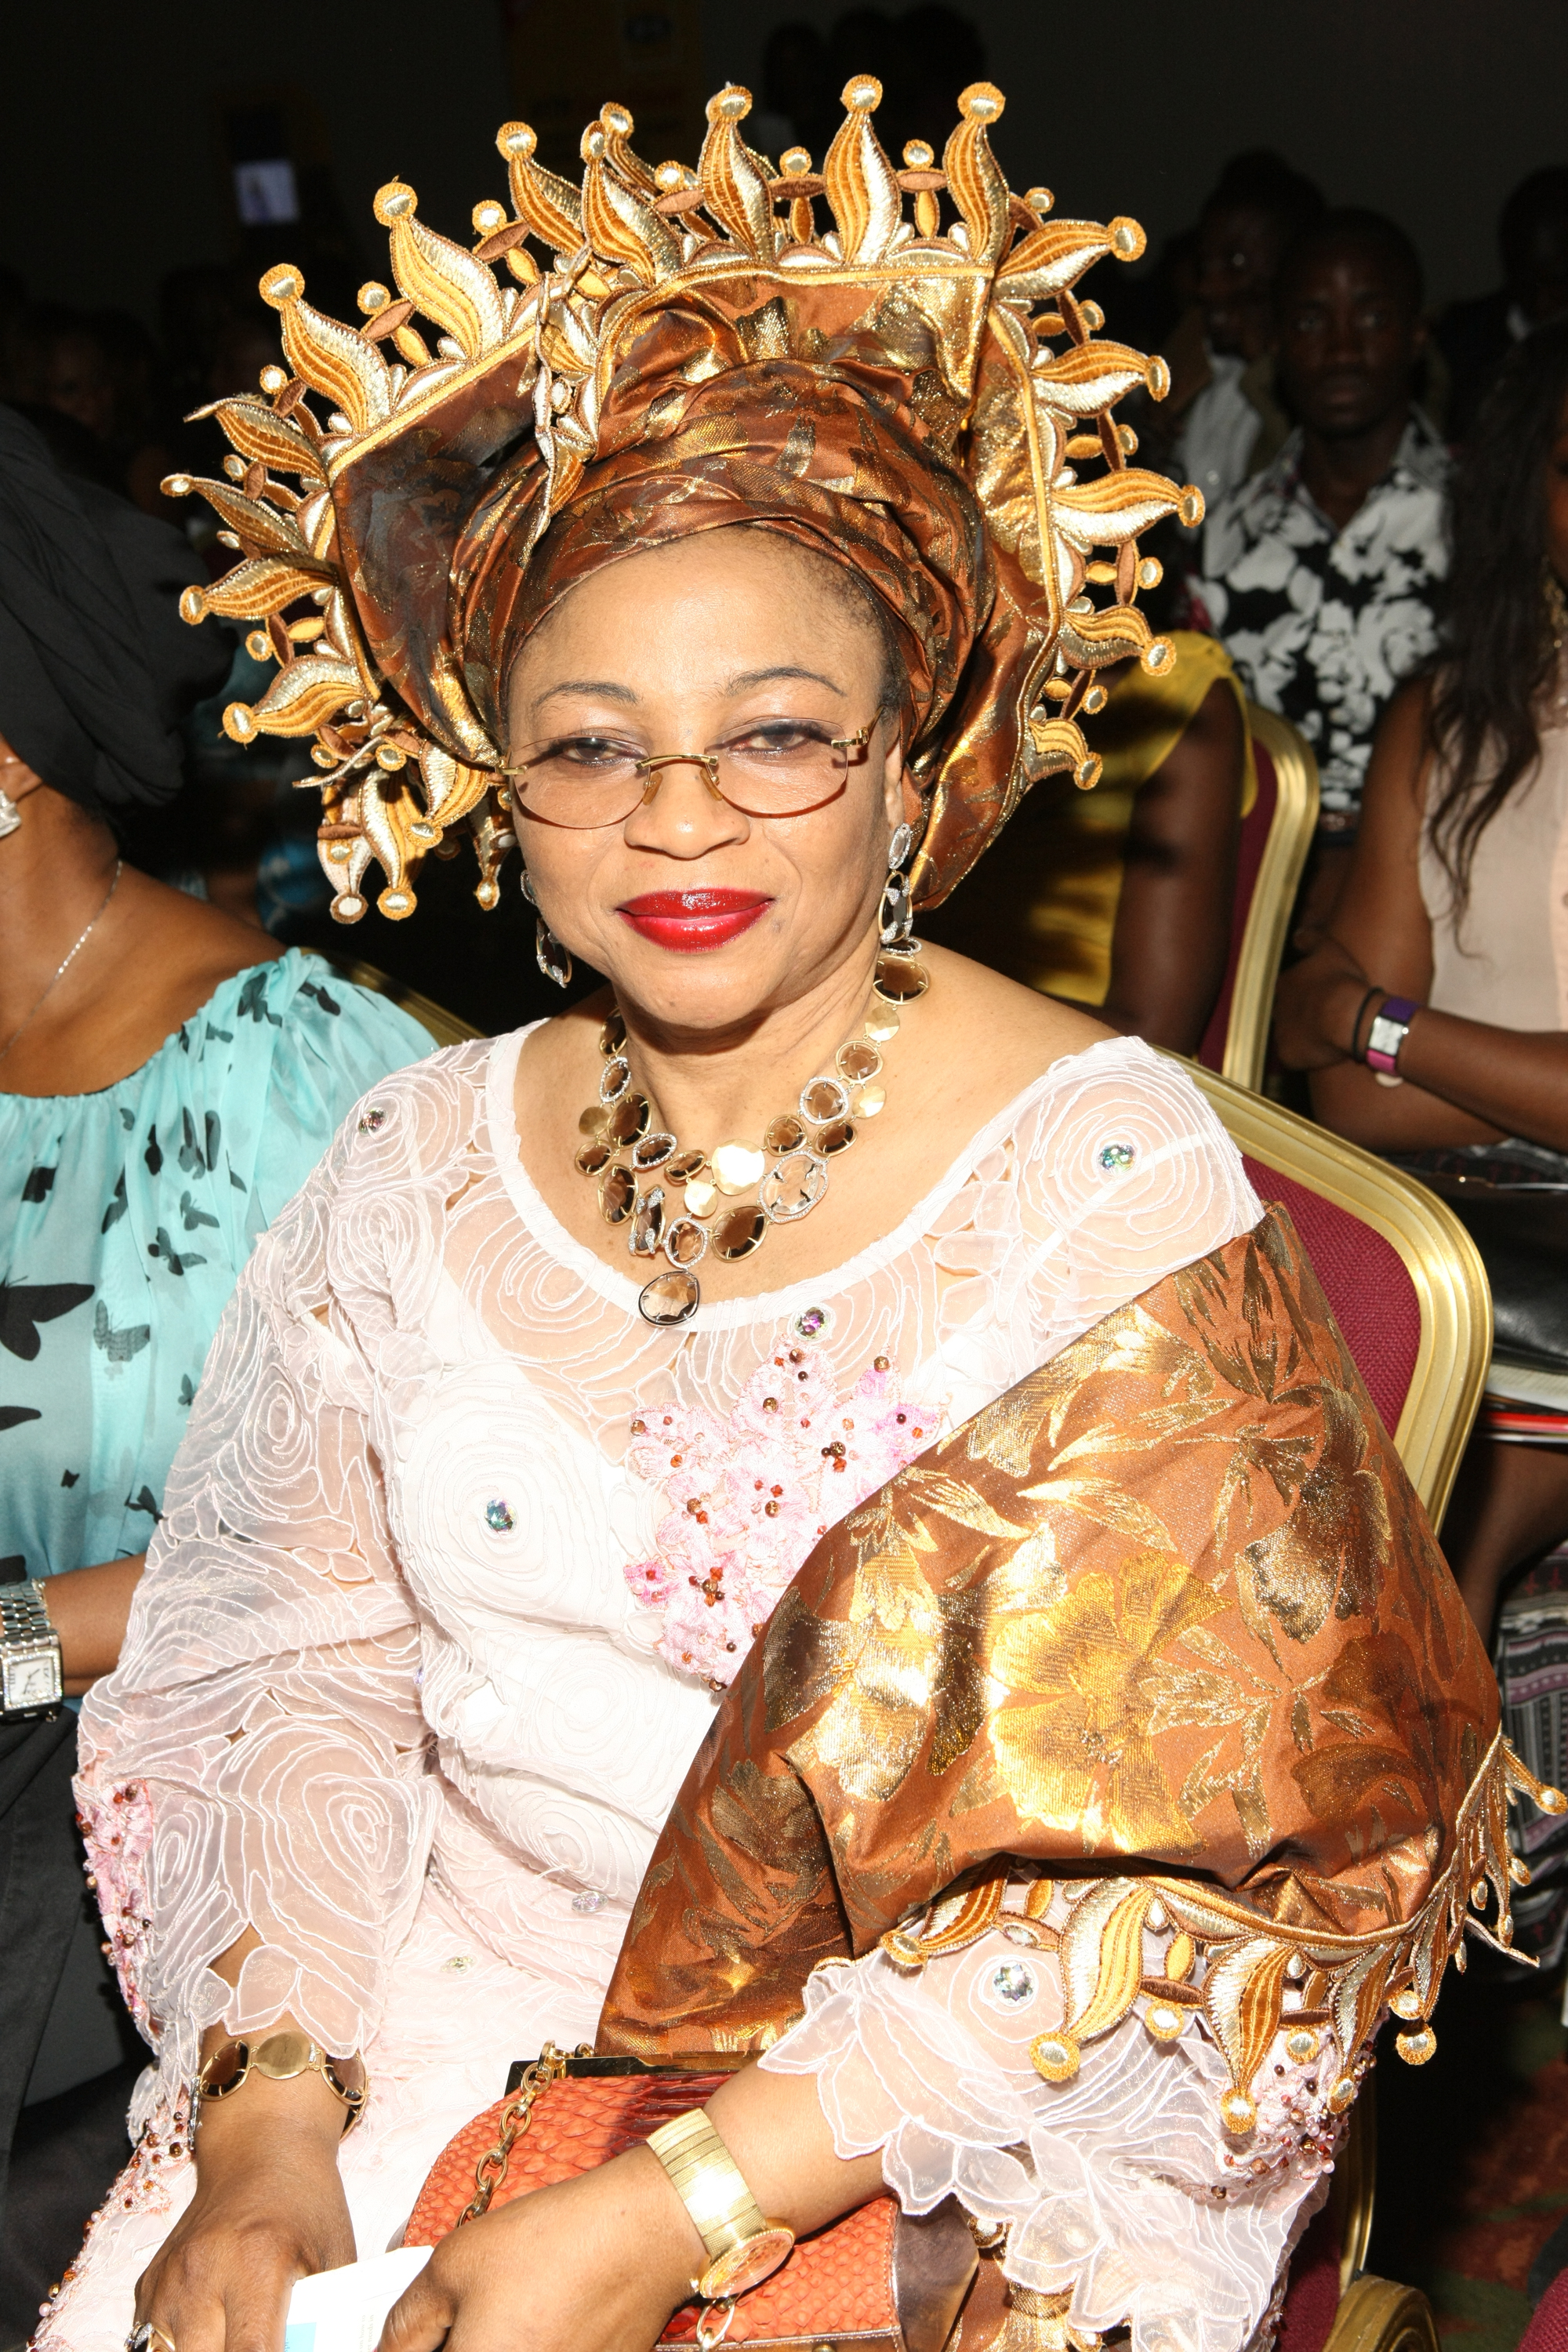 Folorunsho Alakija attends a fashion show in Lagos, Nigeria, on Dec. 27, 2012 (Bennett Raglin—Getty Images)